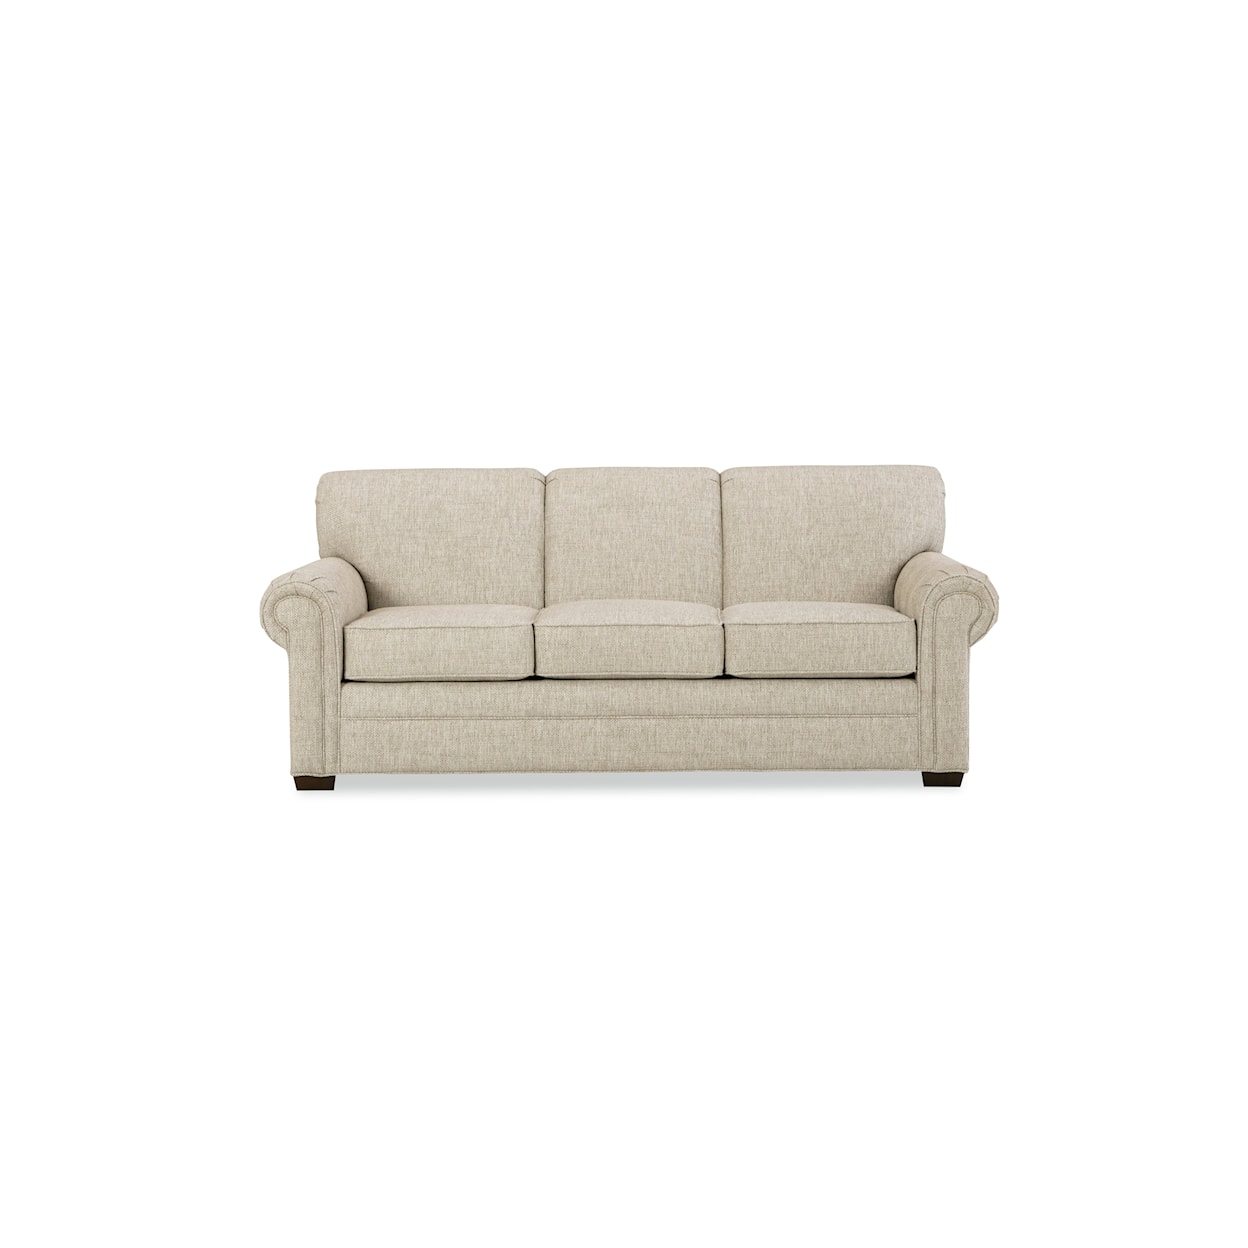 Hickory Craft 726150 Queen Sleeper Sofa